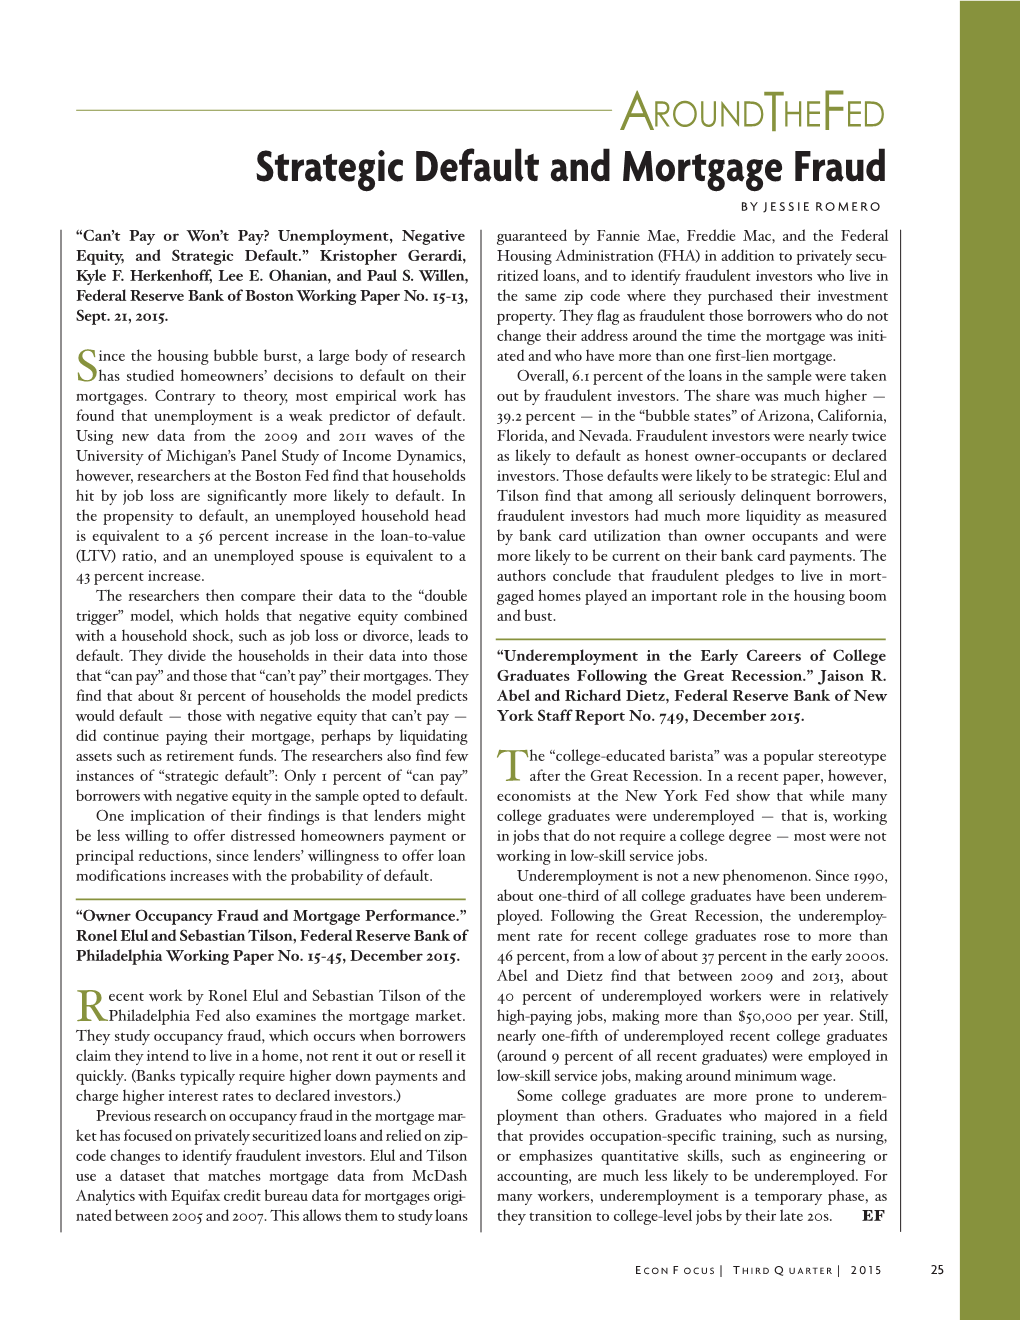 Strategic Default and Mortgage Fraud by JESSIE ROMERO